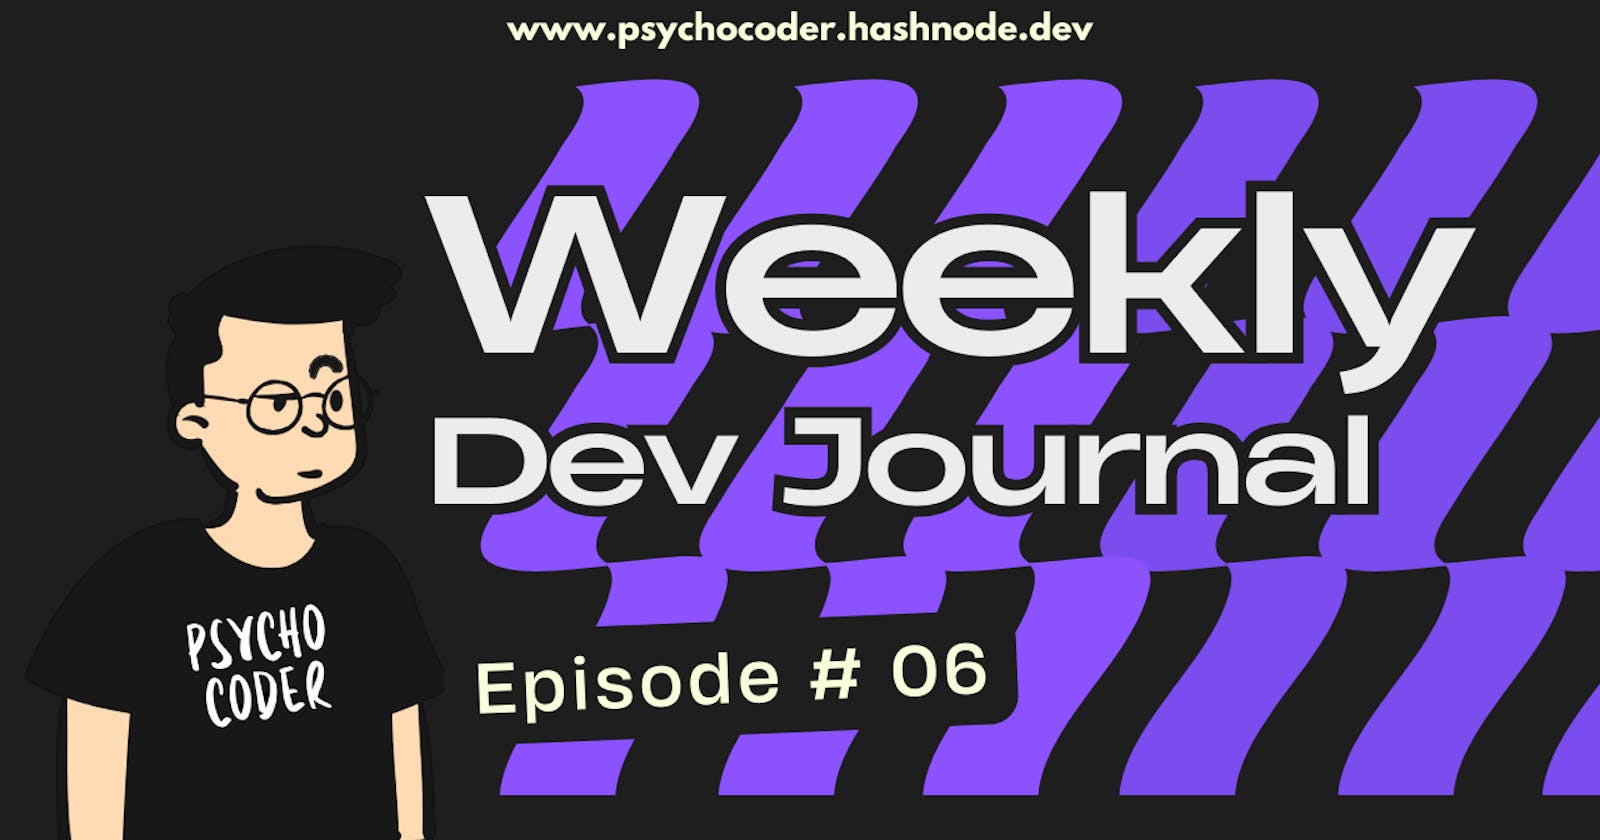 Weekly Dev Journal - Episode # 06